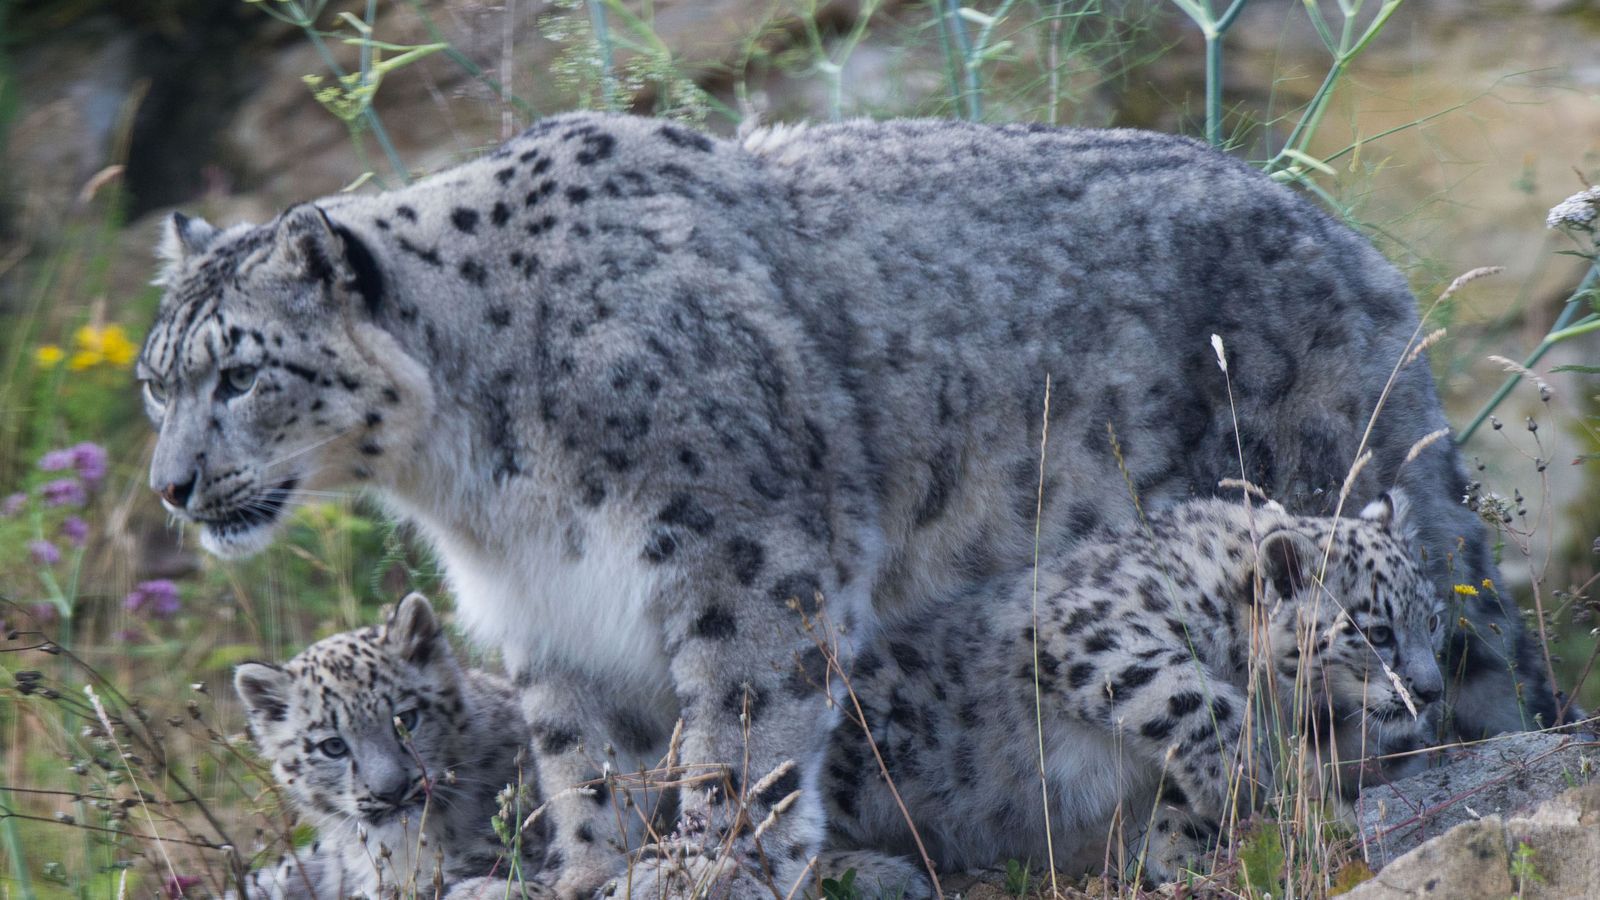 Snow leopard DNA helps develop 'pregnancy test' technique that